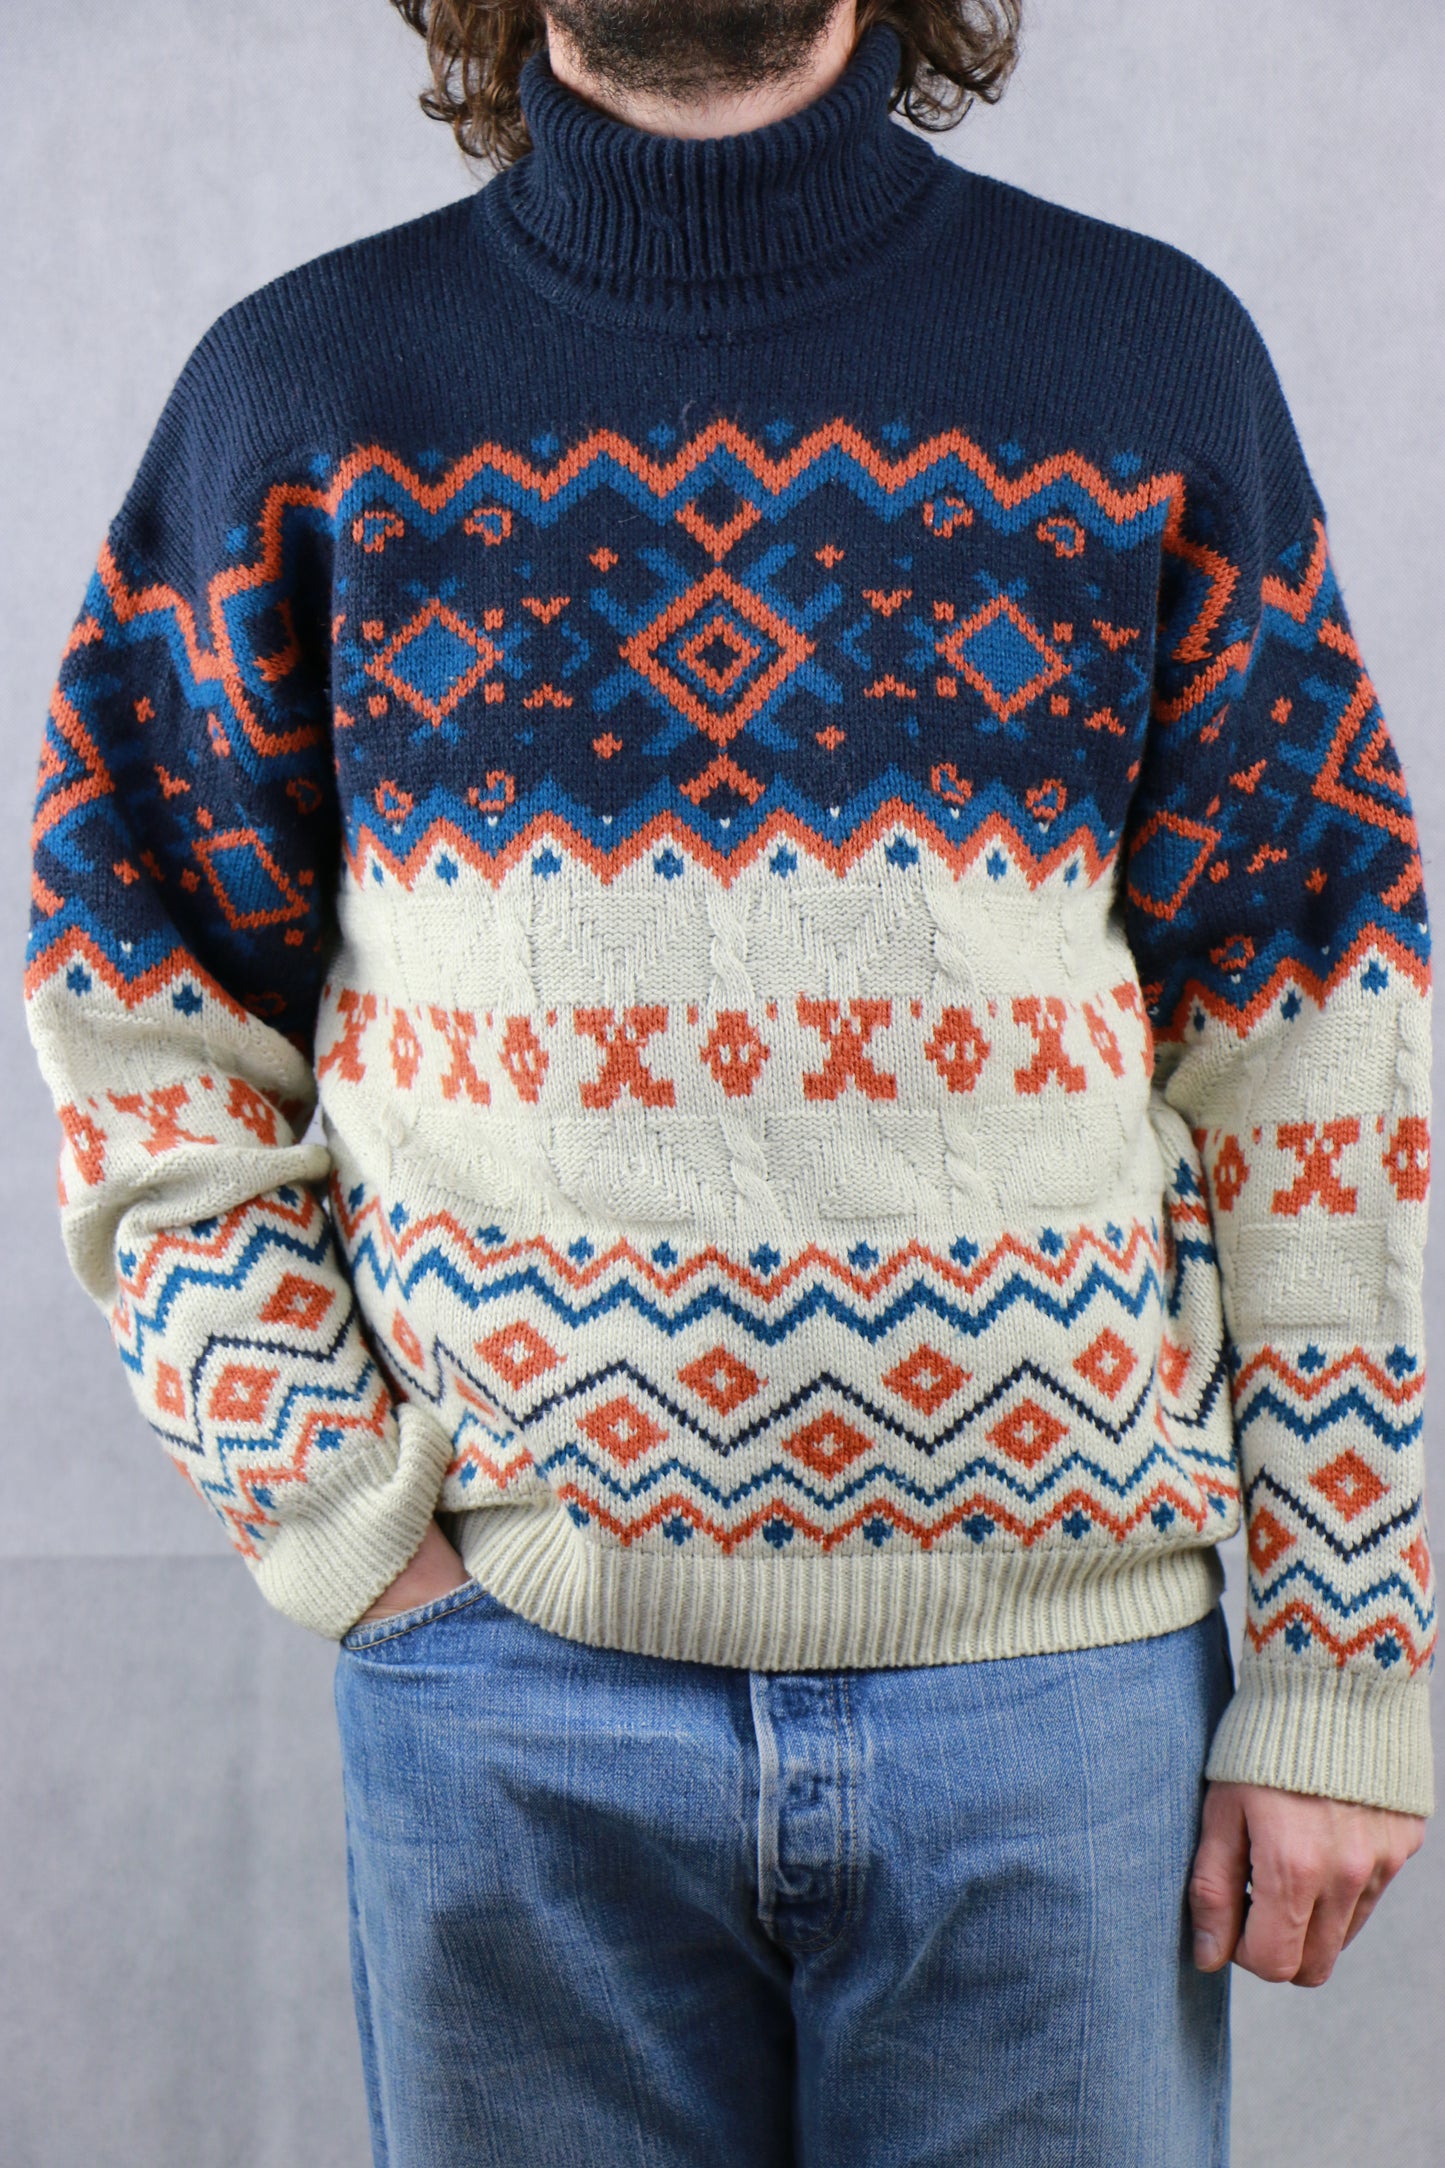 Handmade Turtleneck Sweater, vintage store clochard92.com